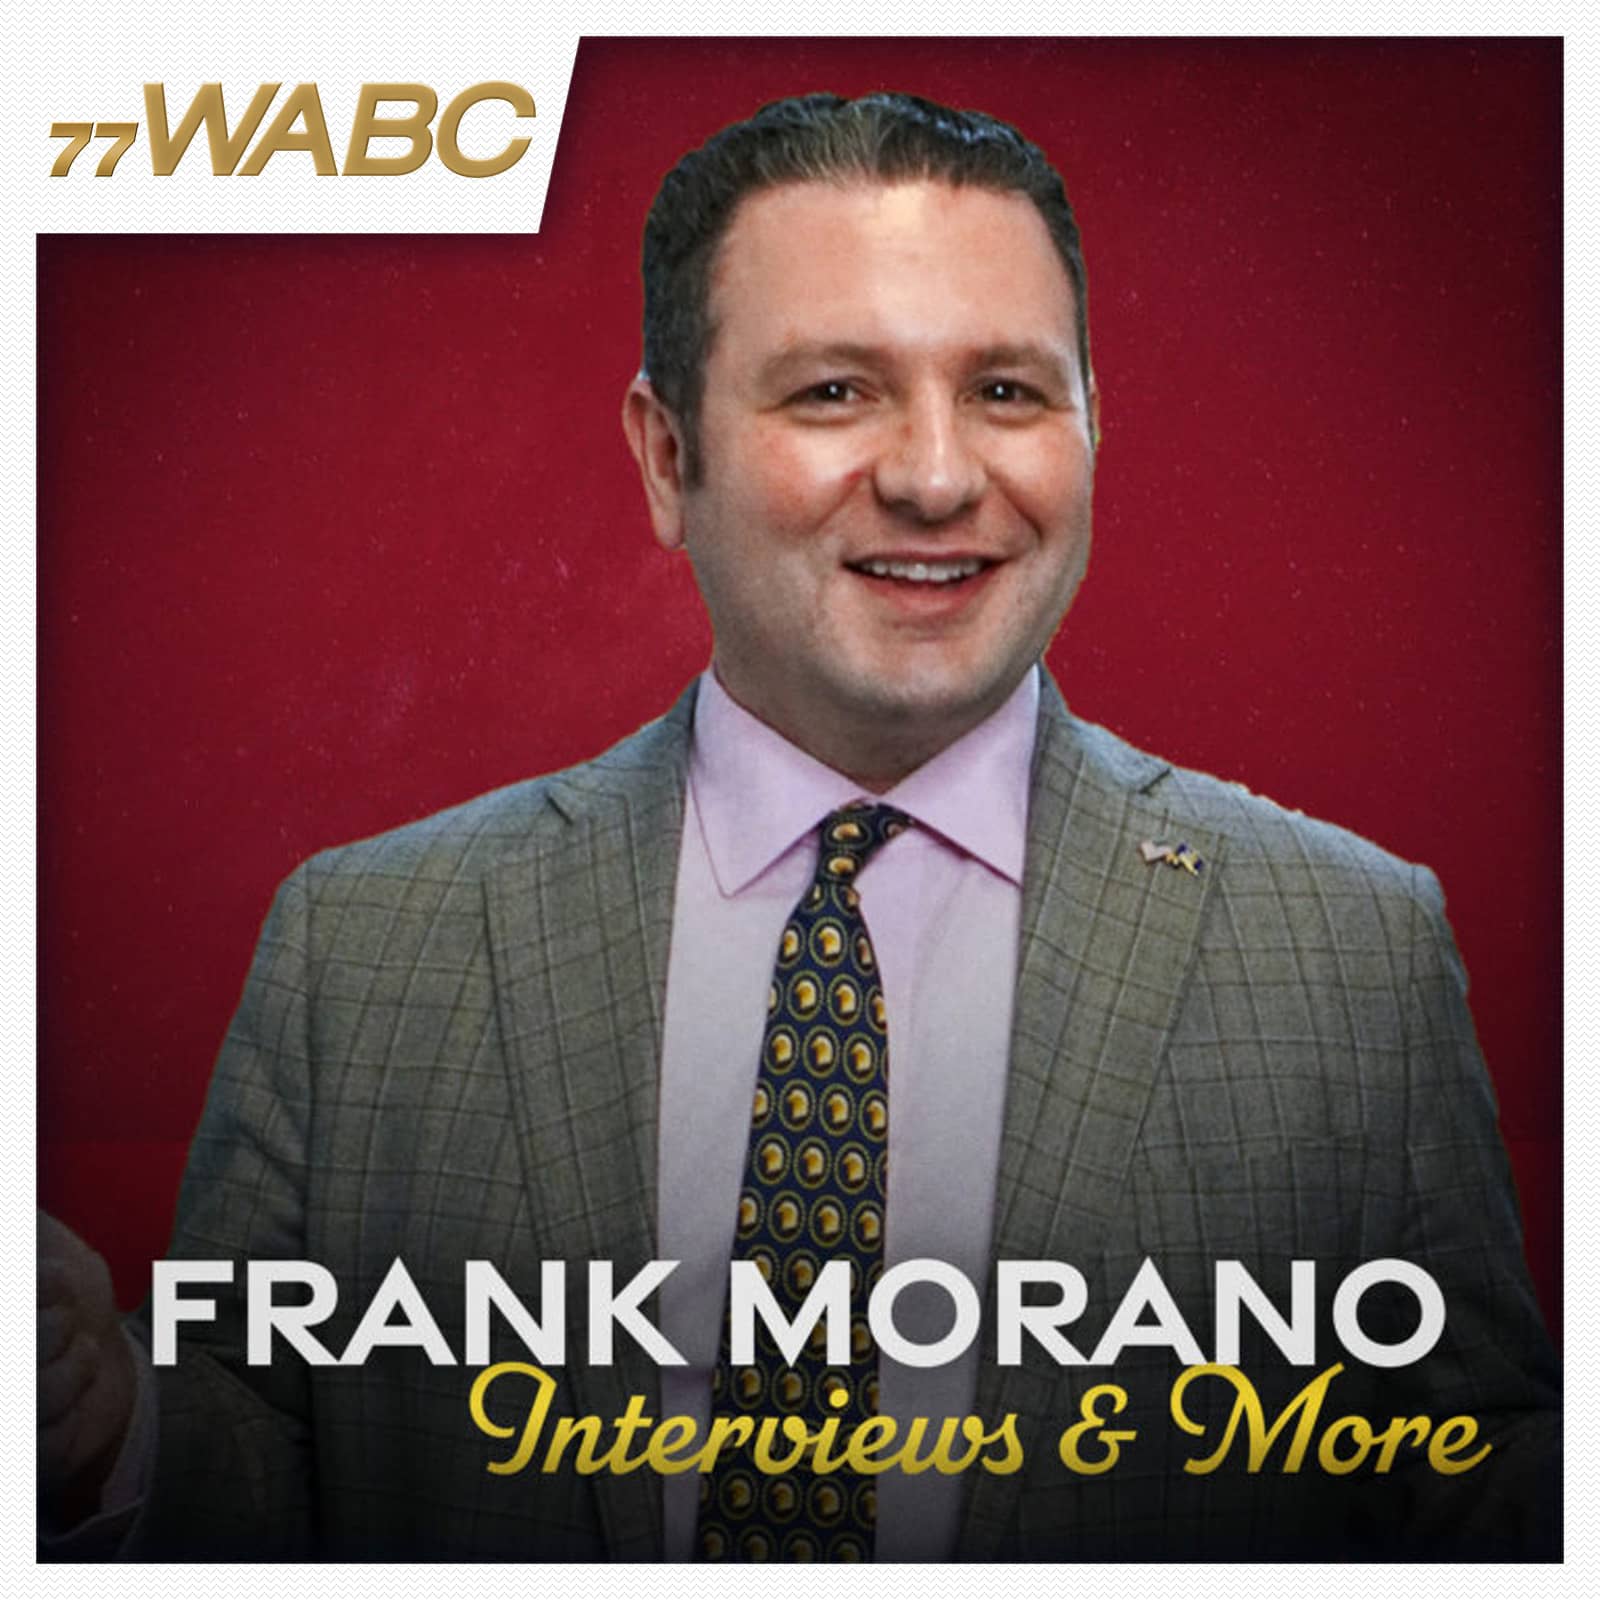 frank-morano-interviews-and-more-podcast-new-logo-178